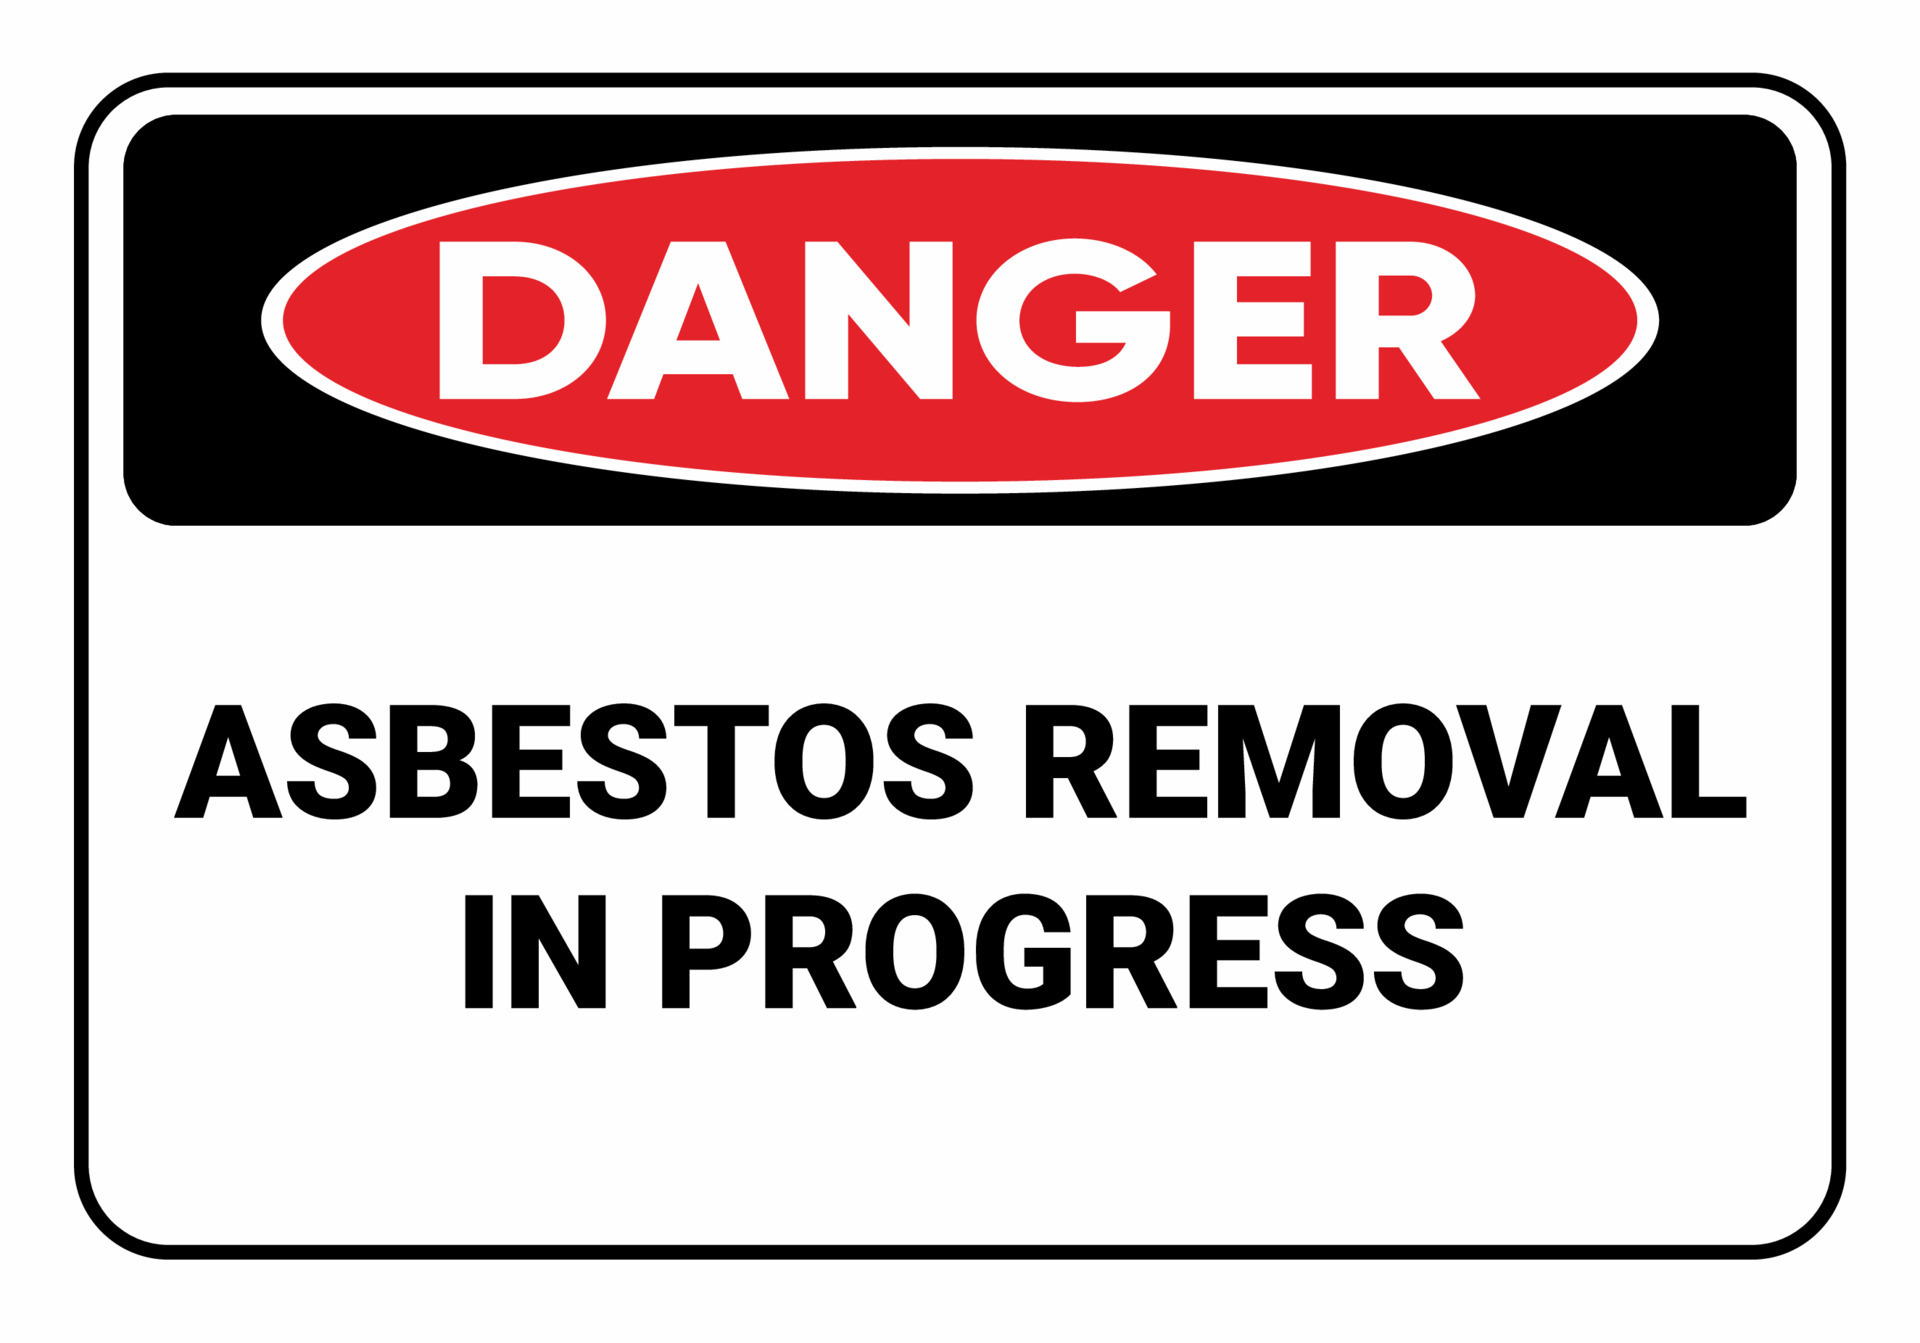 Asbestos Removal in Progress Danger Signs 